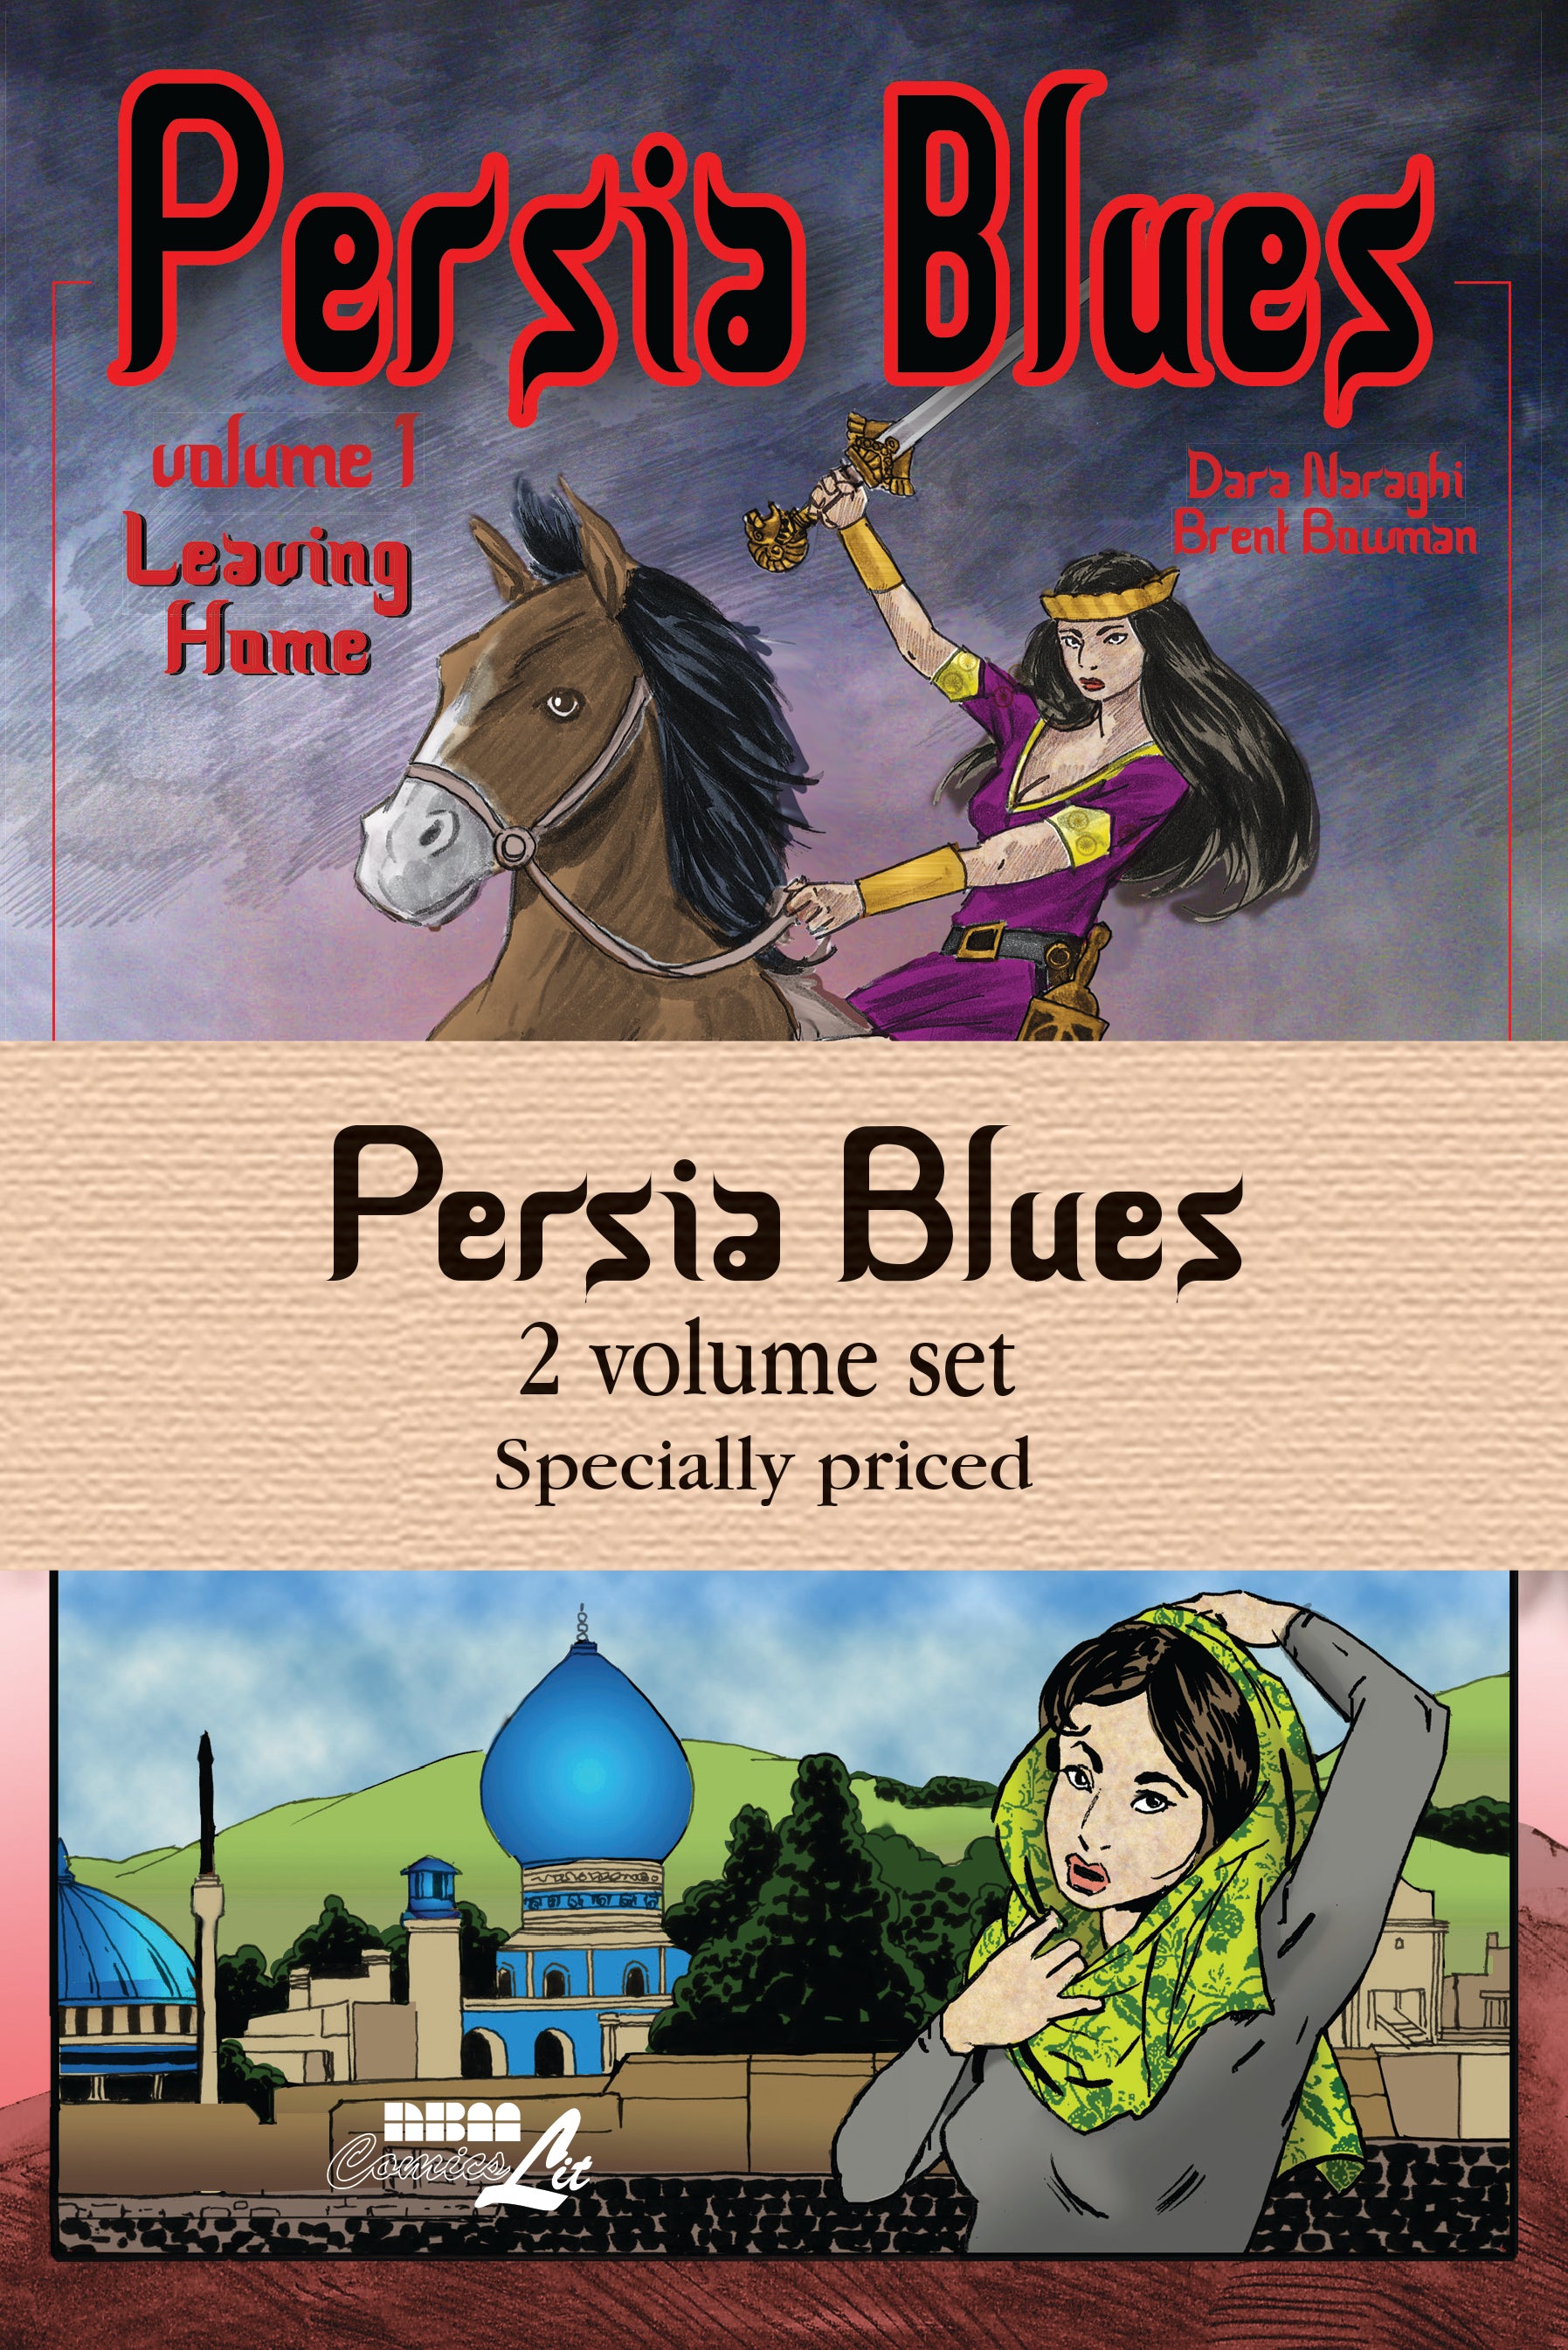 Persia Blues, 2-volume set